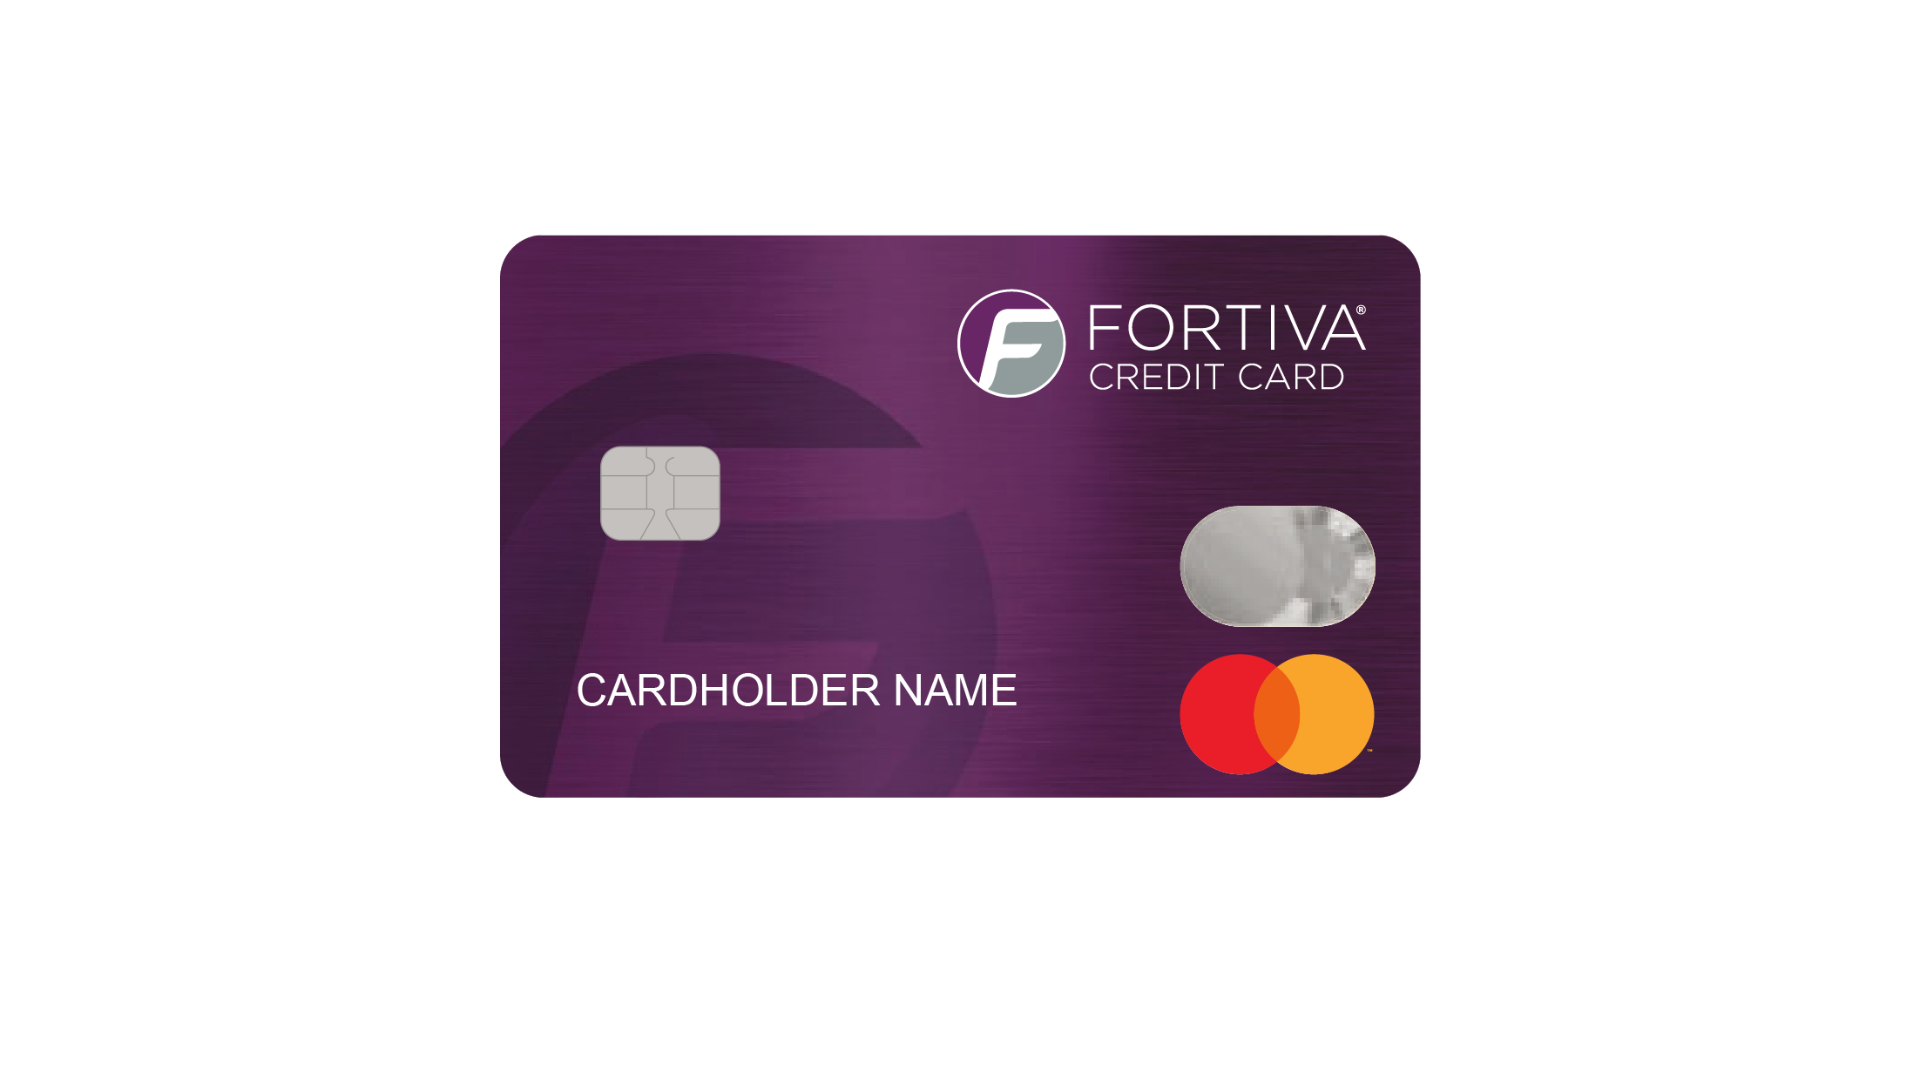 Fortiva® Mastercard® Credit Card with Cashback Rewards